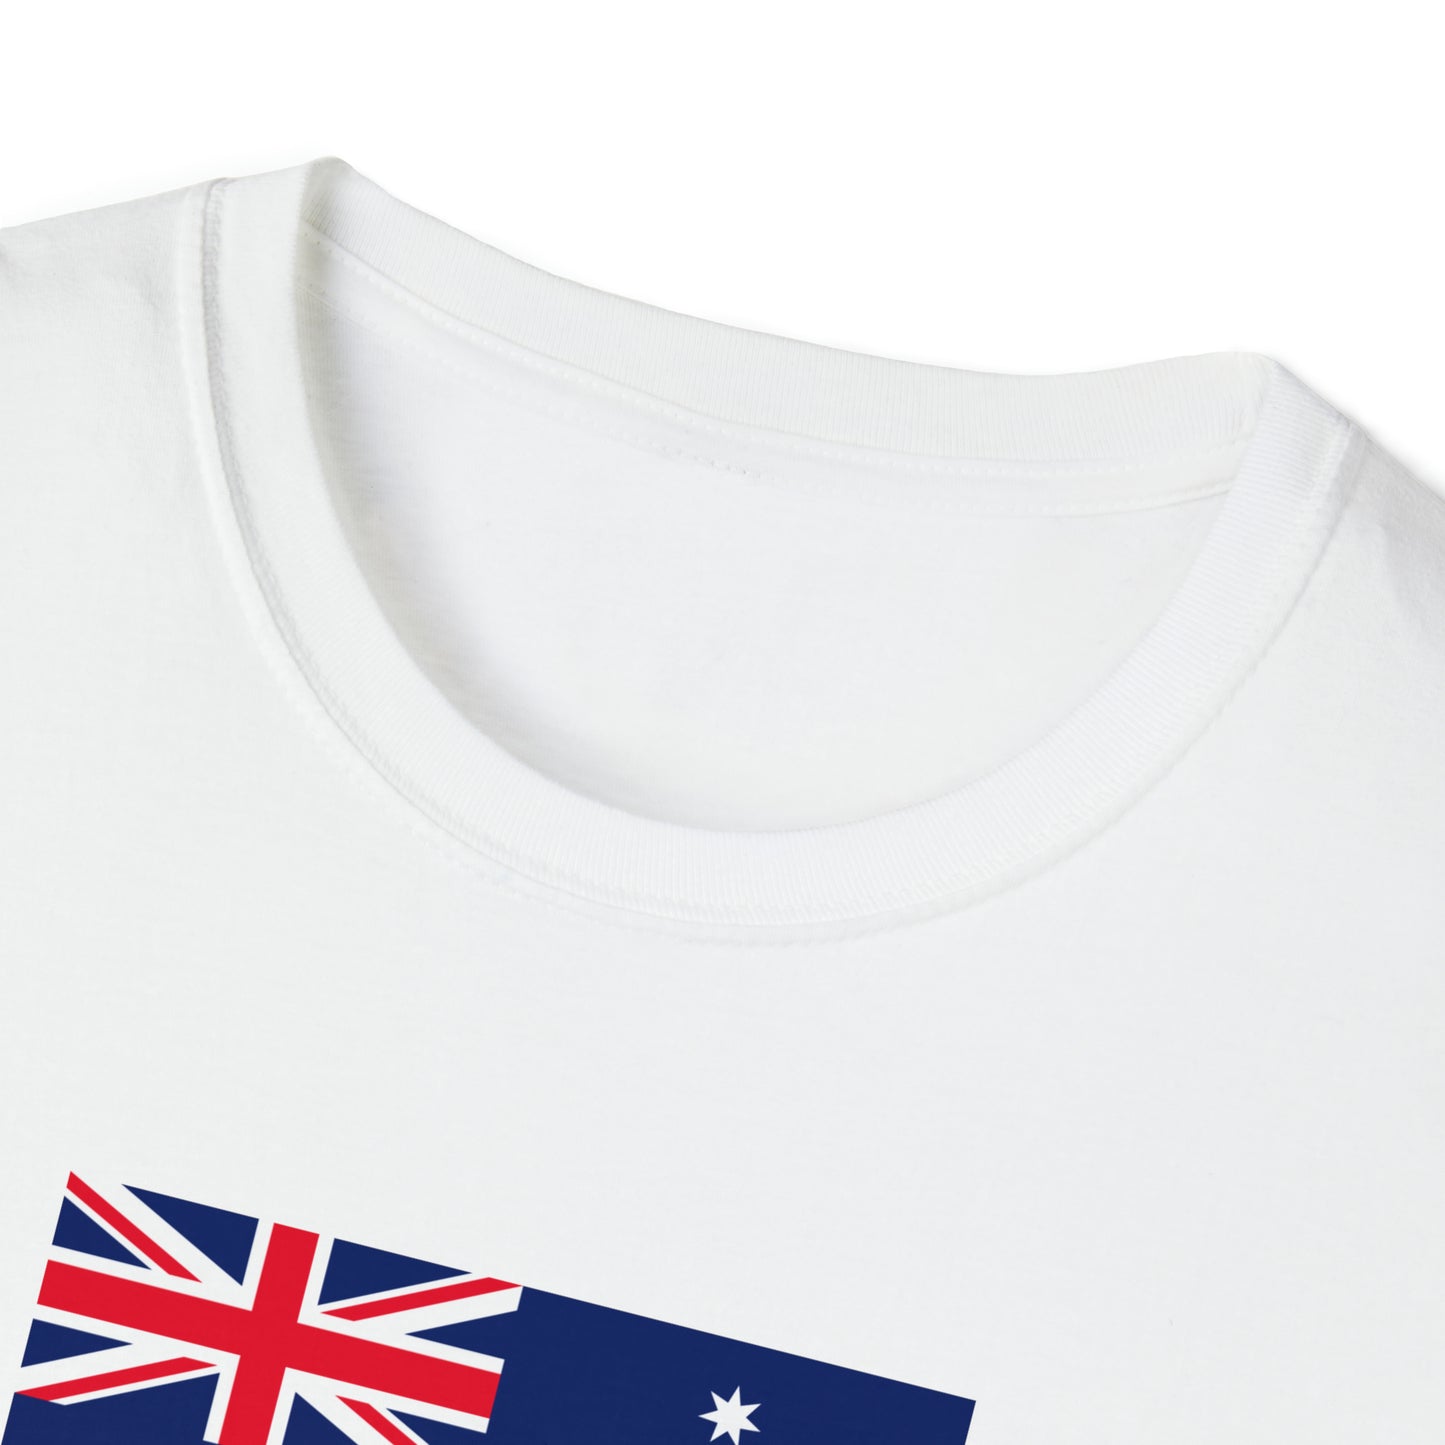 Australian Flag, Unisex Softstyle T-Shirt